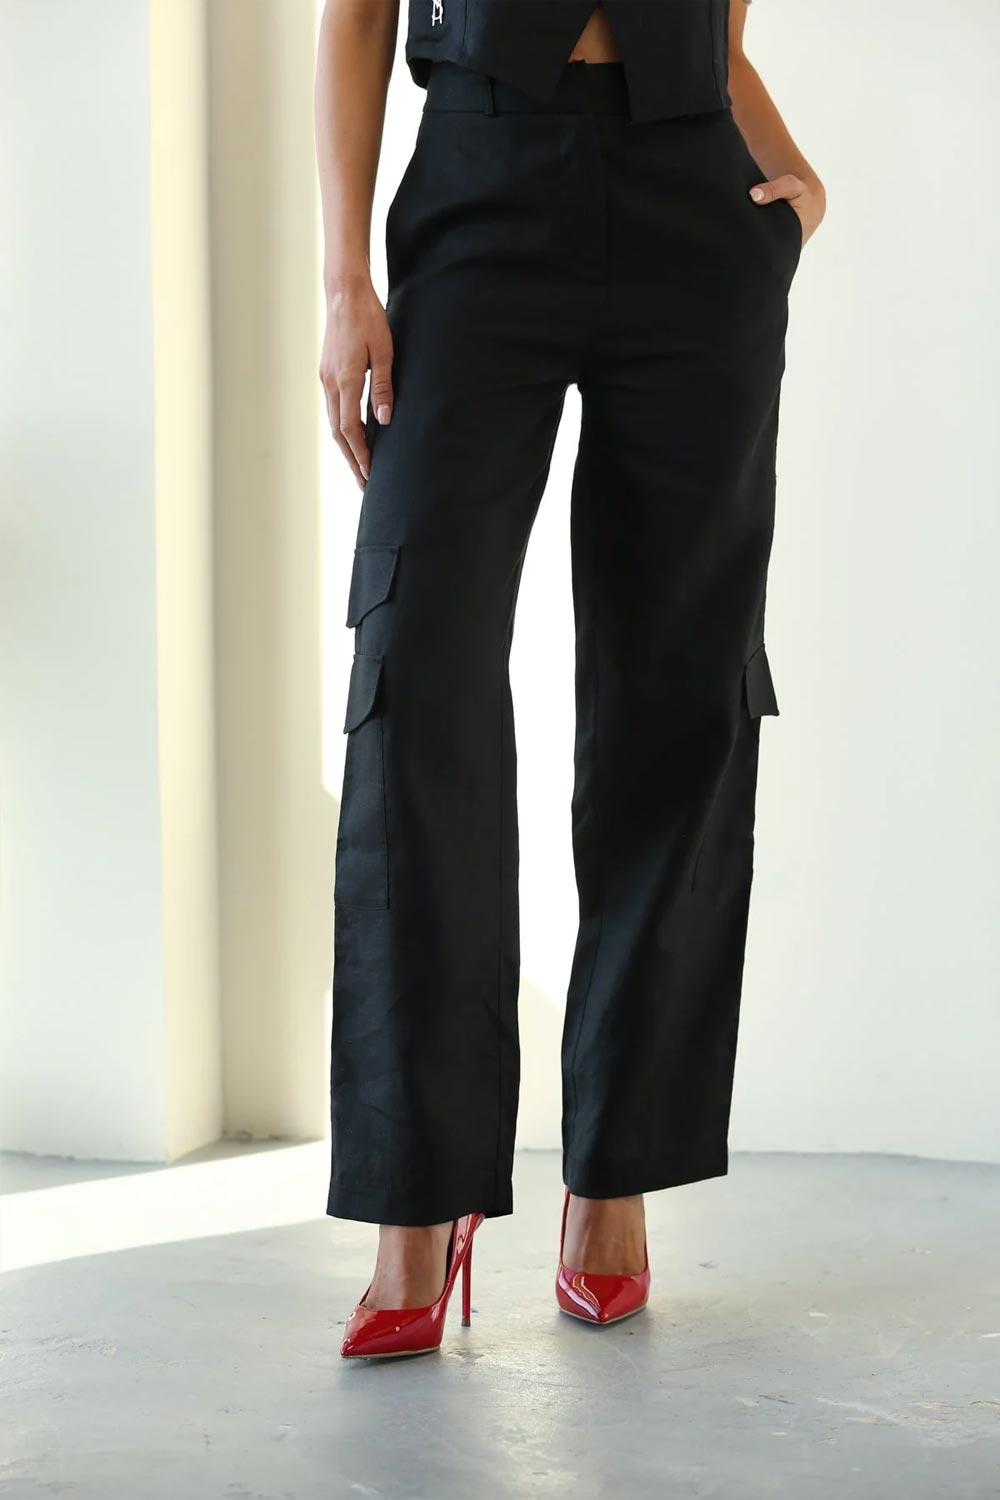 Steve Madden מכנסיים ארוכים Mew בצבע שחור לנשים-Steve Madden-XS-נאקו